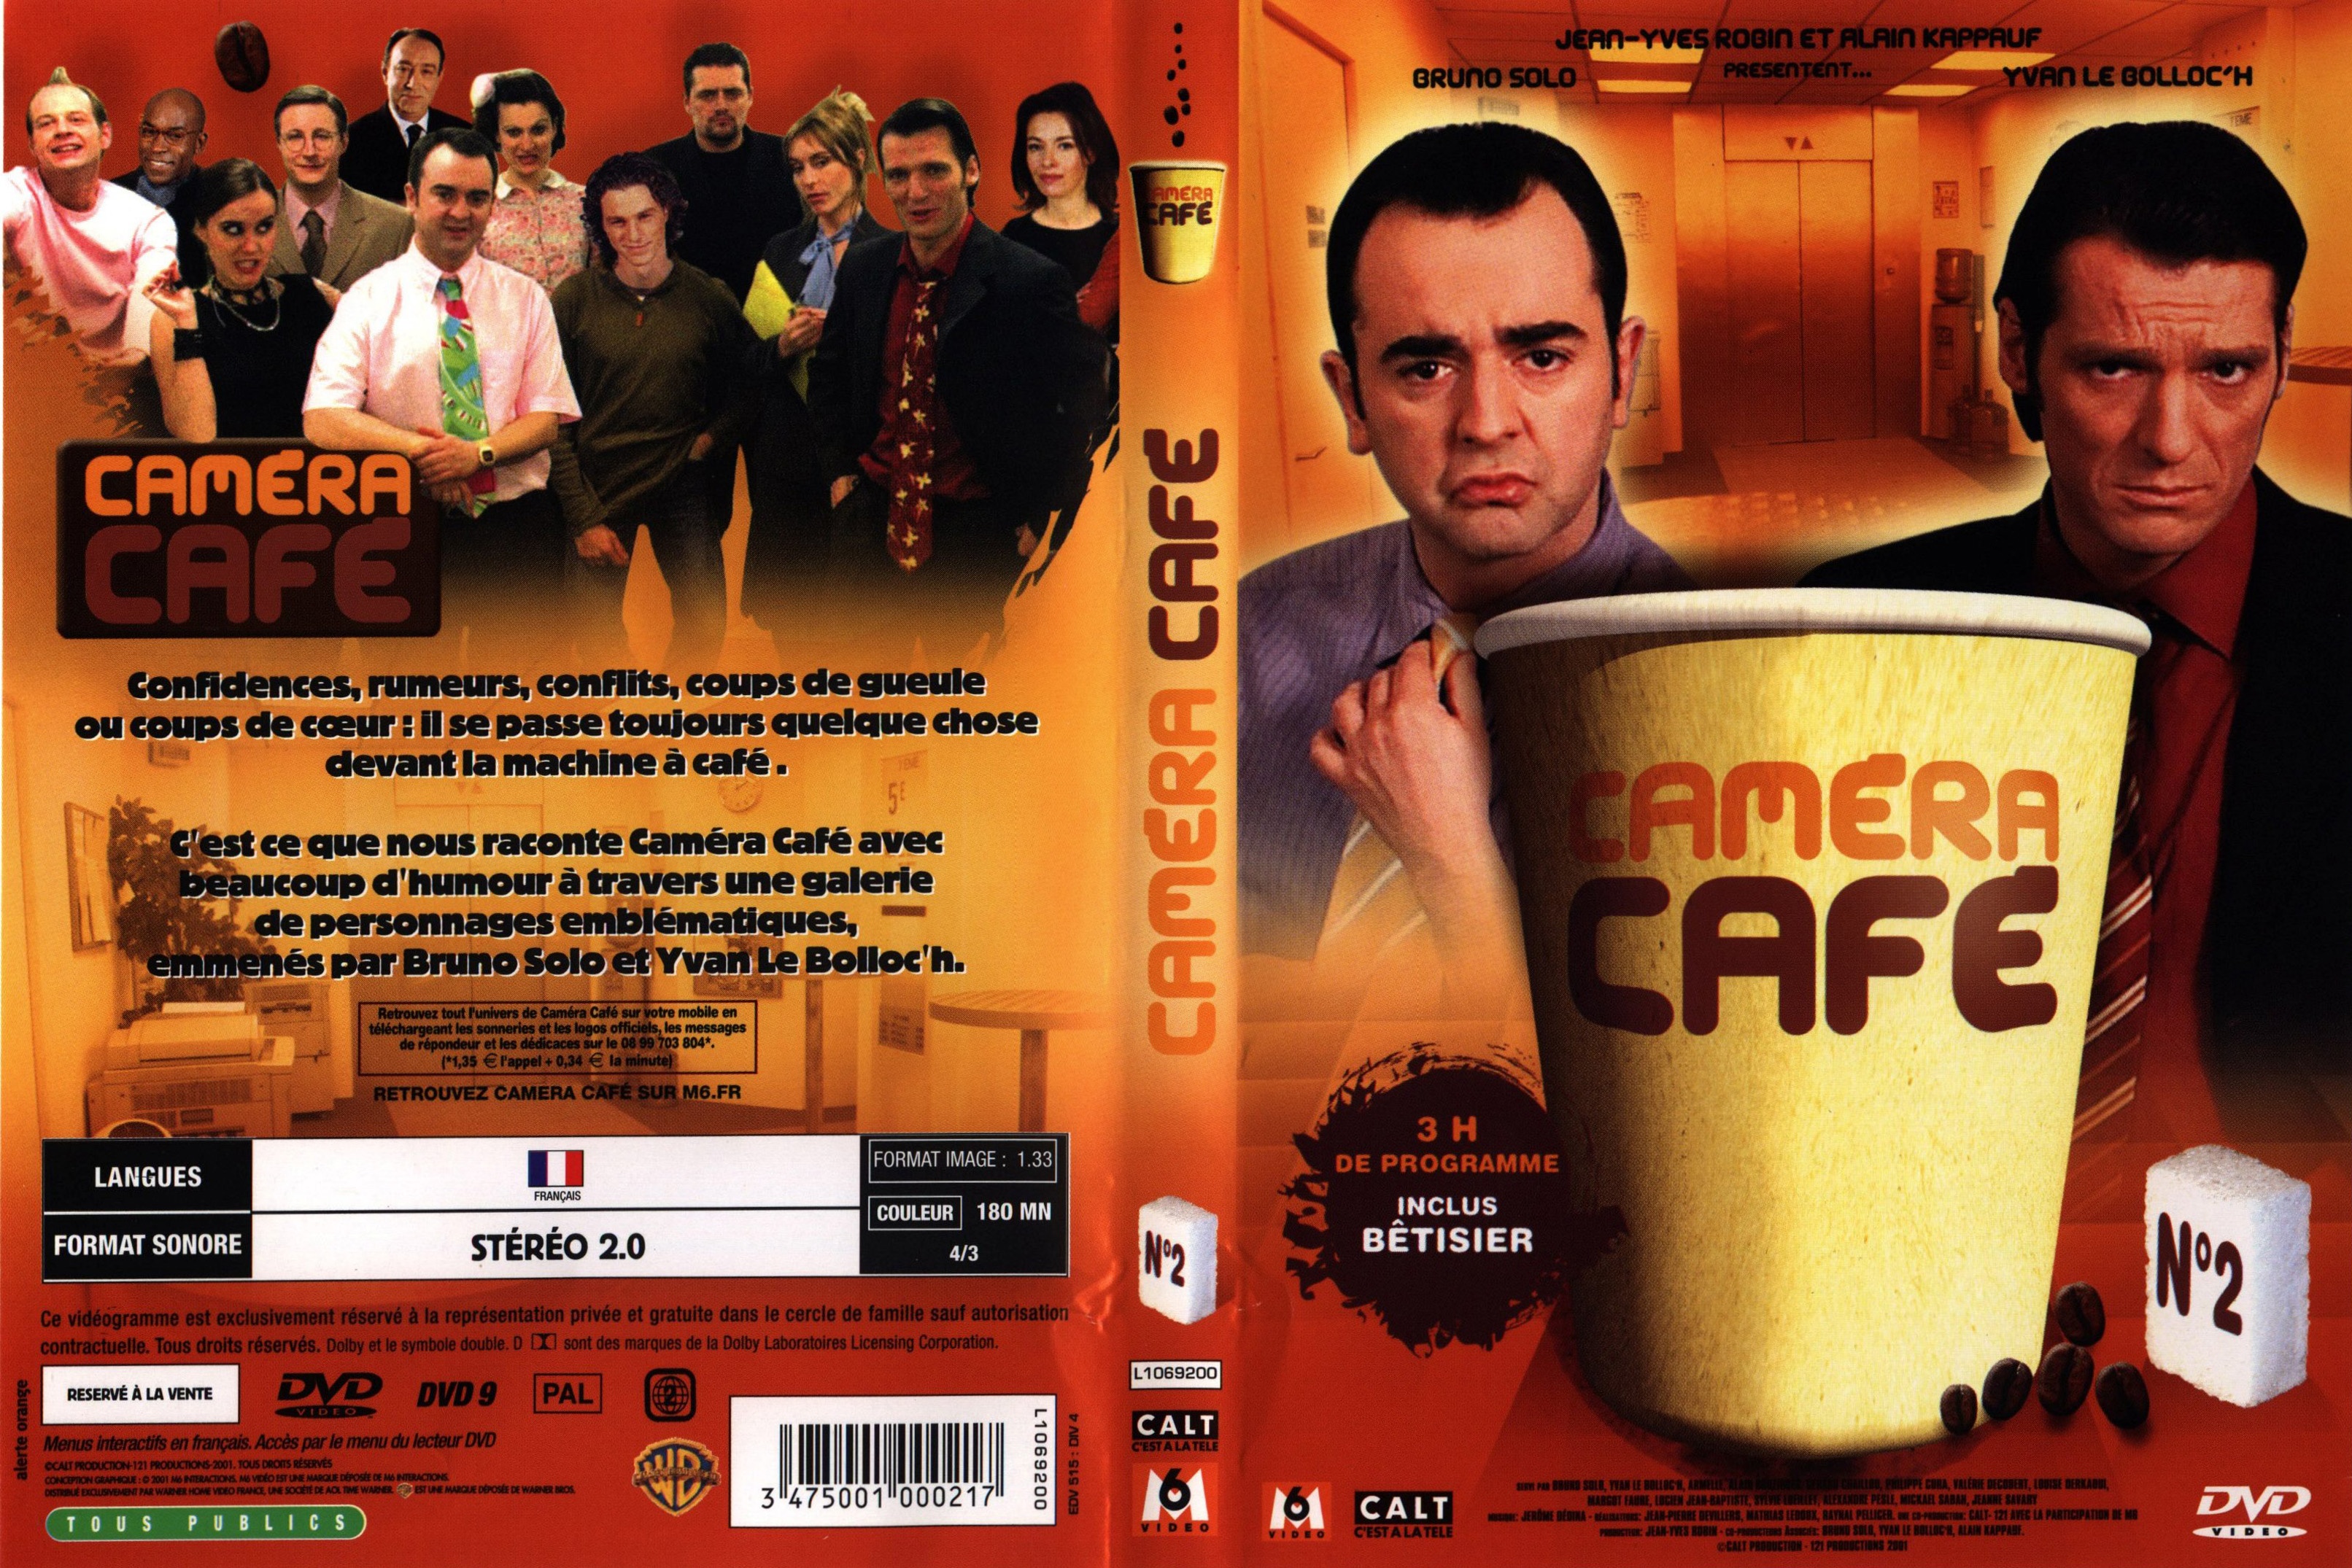 Jaquette DVD Camera Cafe vol 2